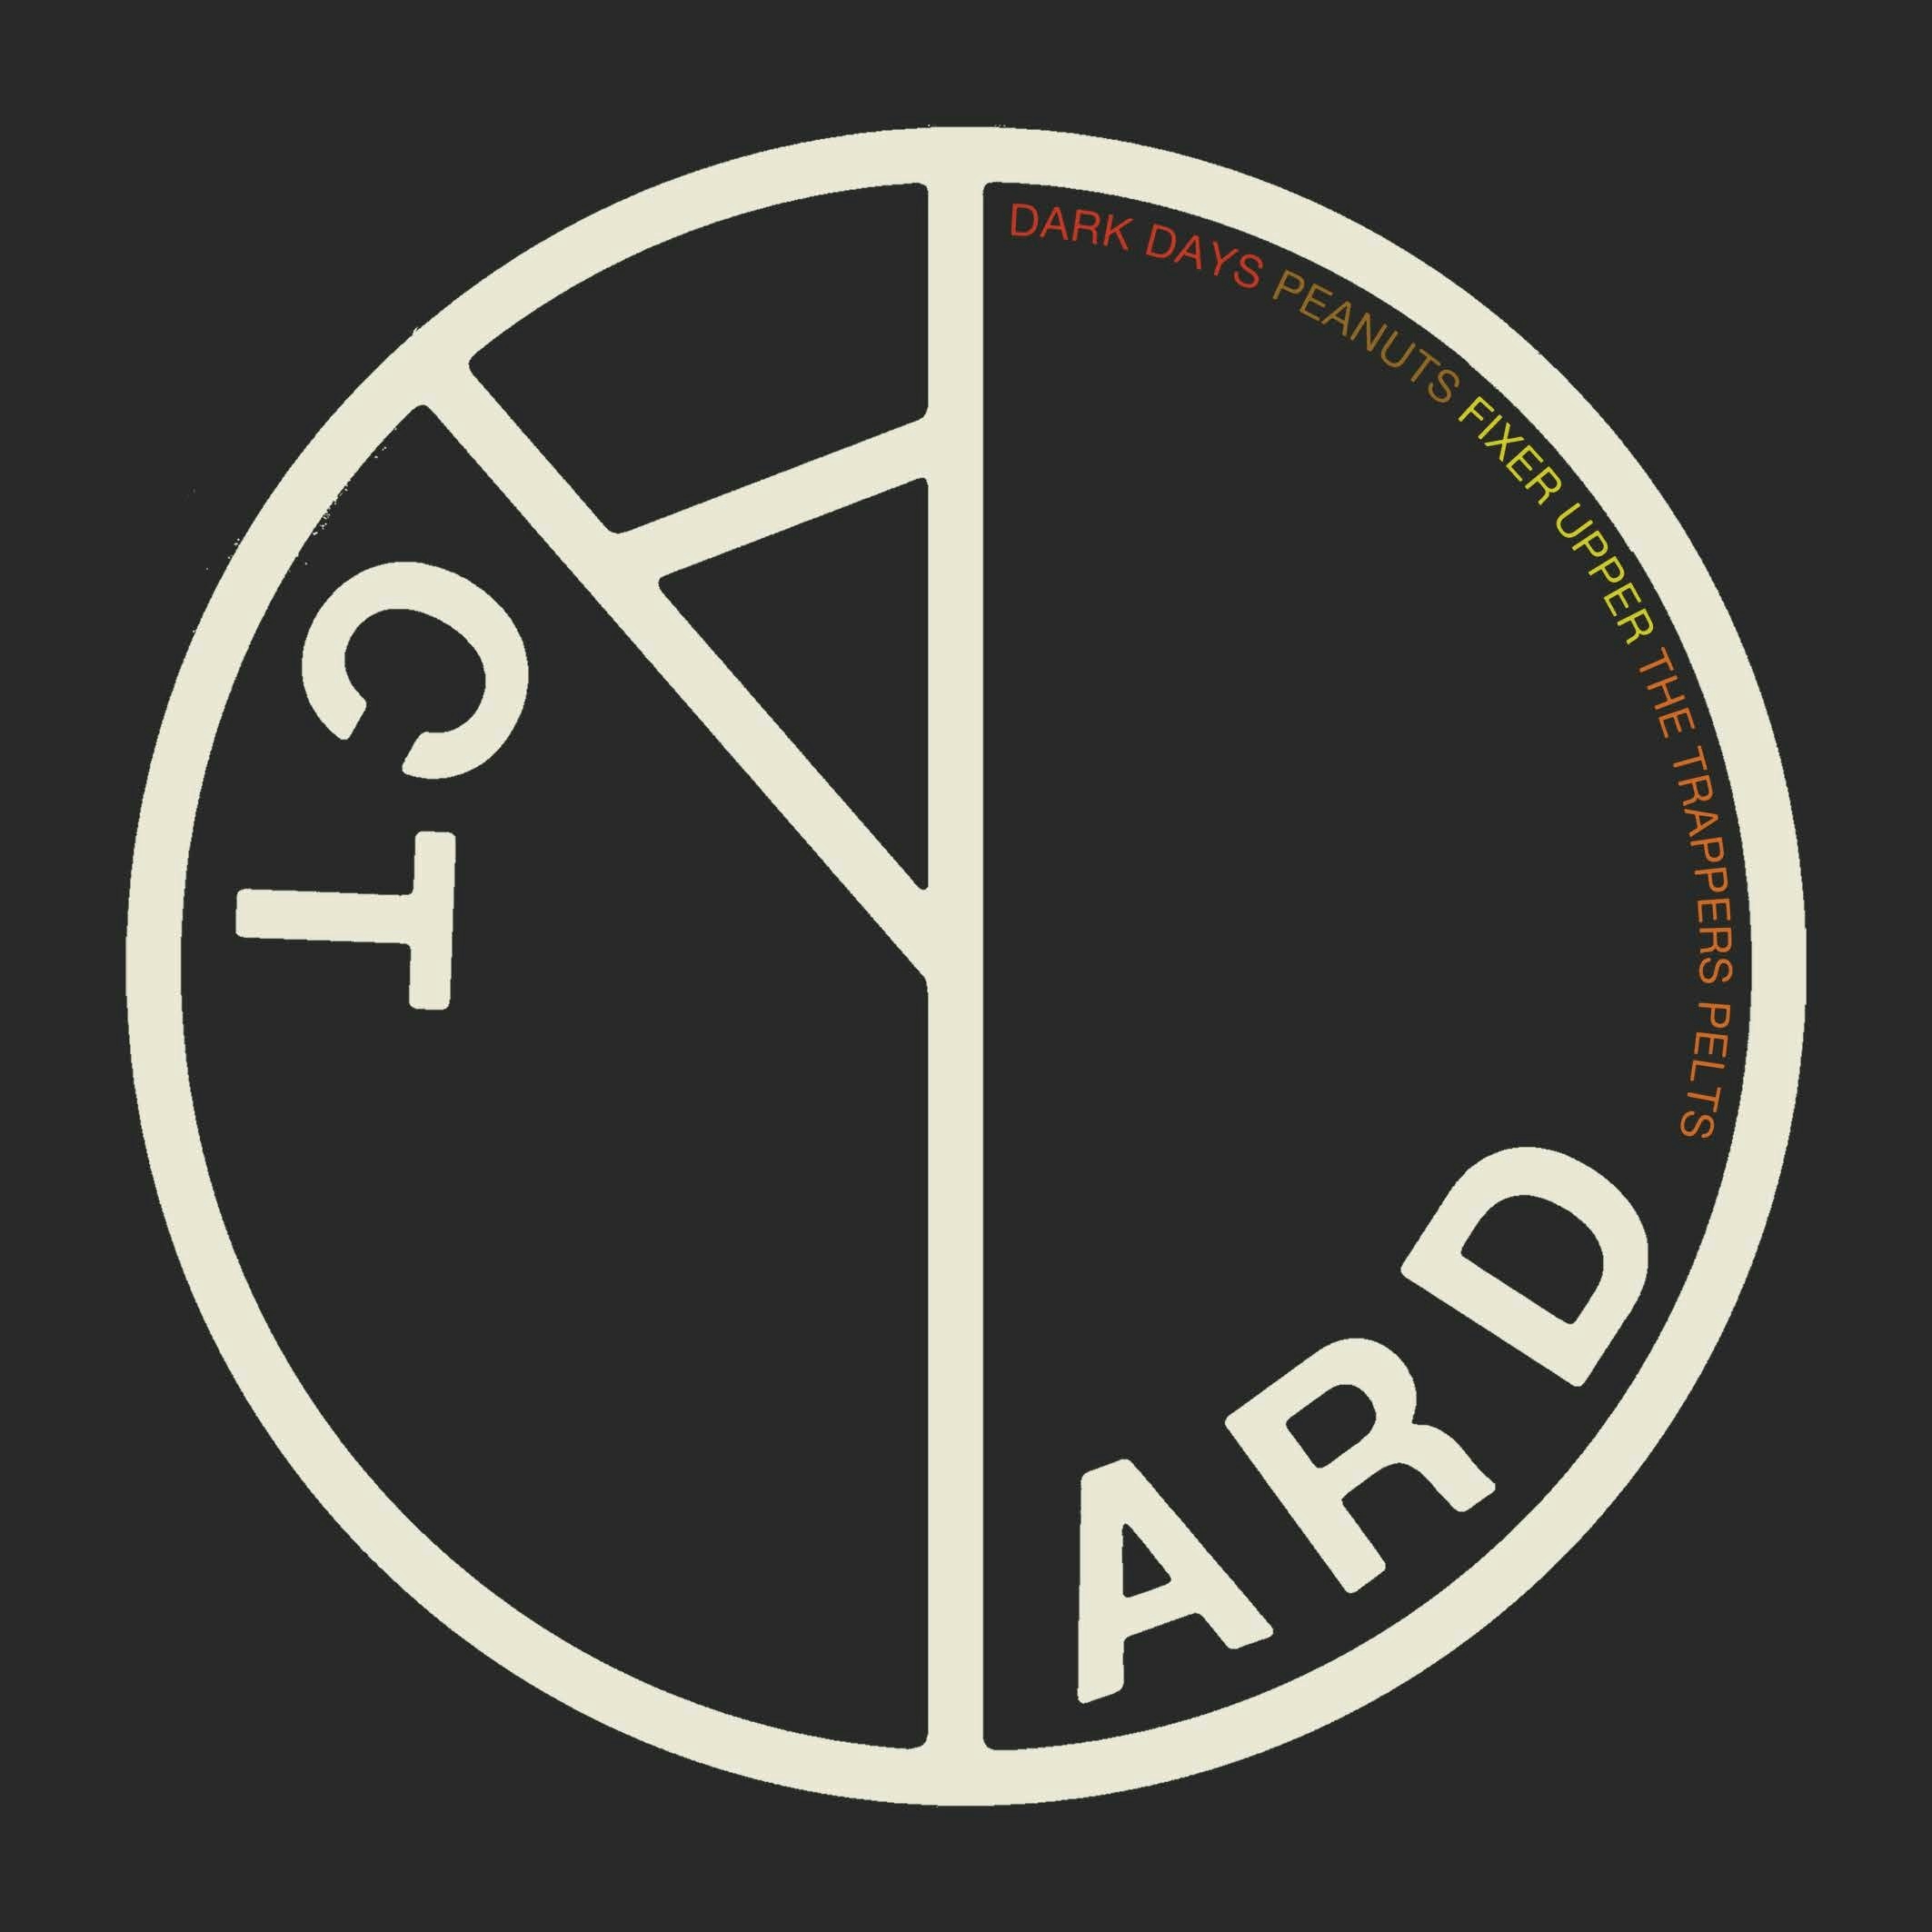 Album artwork for Album artwork for Dark Days EP by Yard Act by Dark Days EP - Yard Act